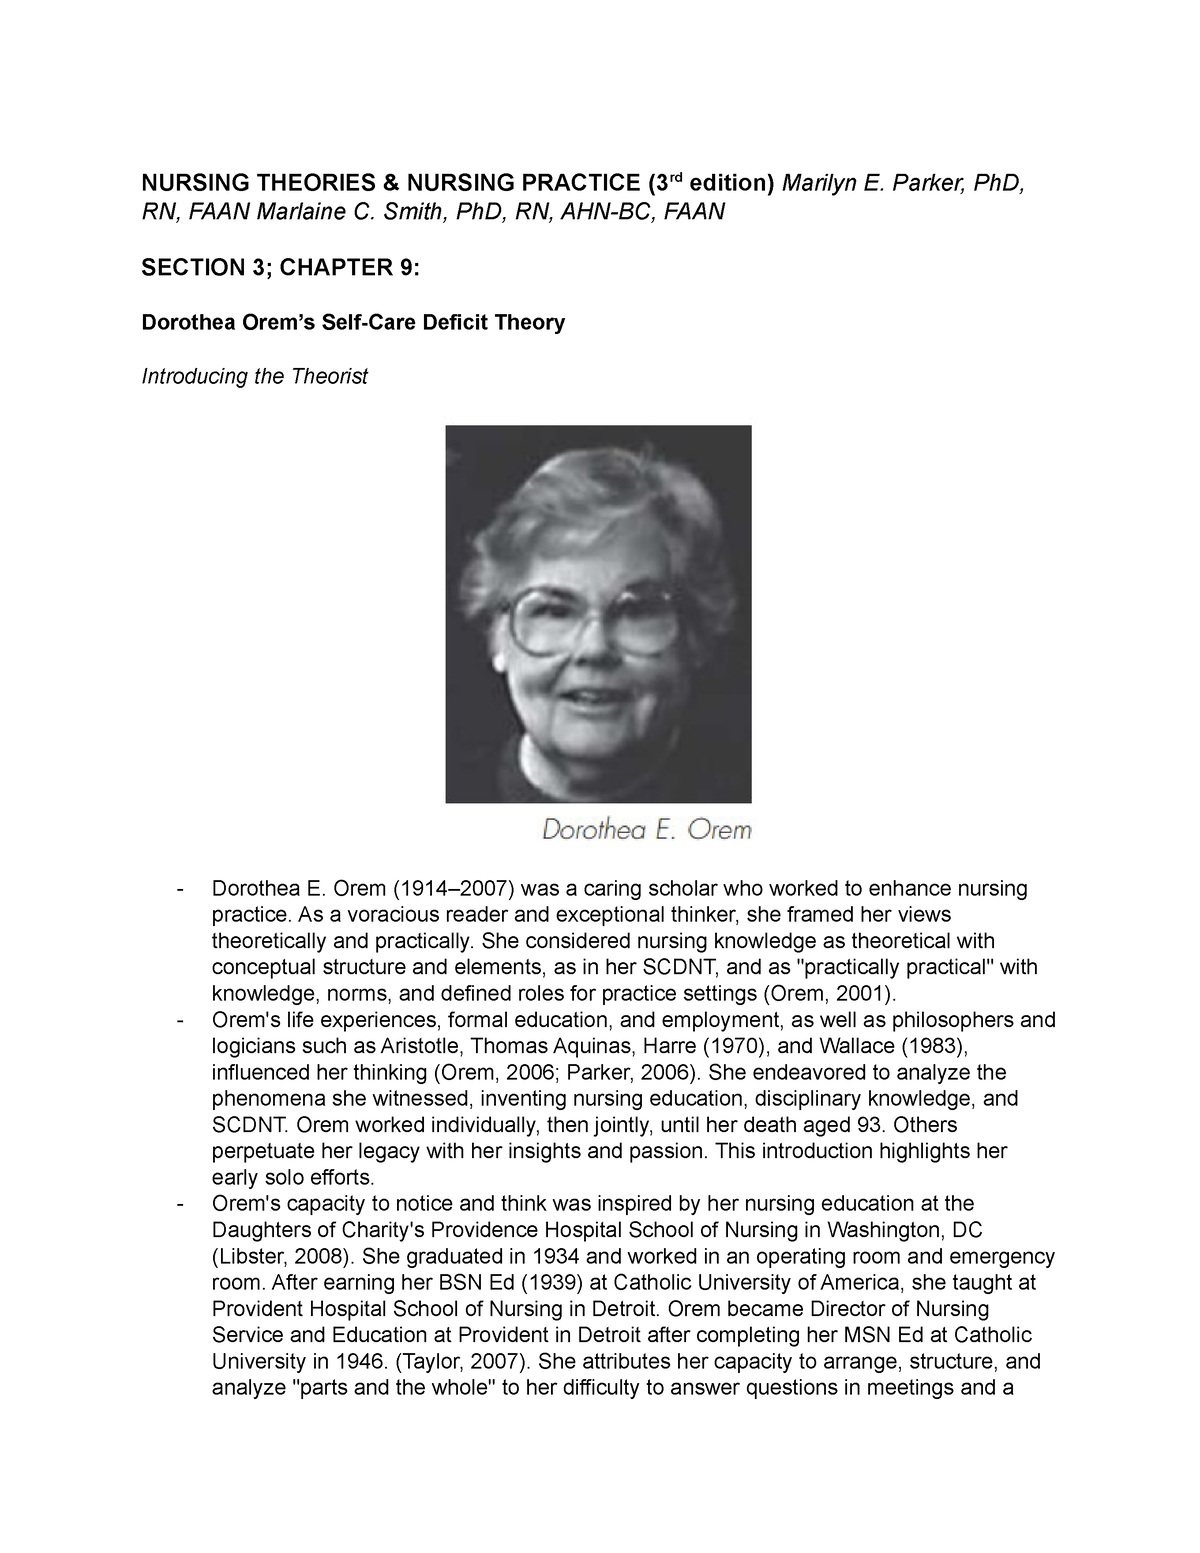 Dorothea Orem - Lecture notes for TFN - NURSING THEORIES & NURSING ...